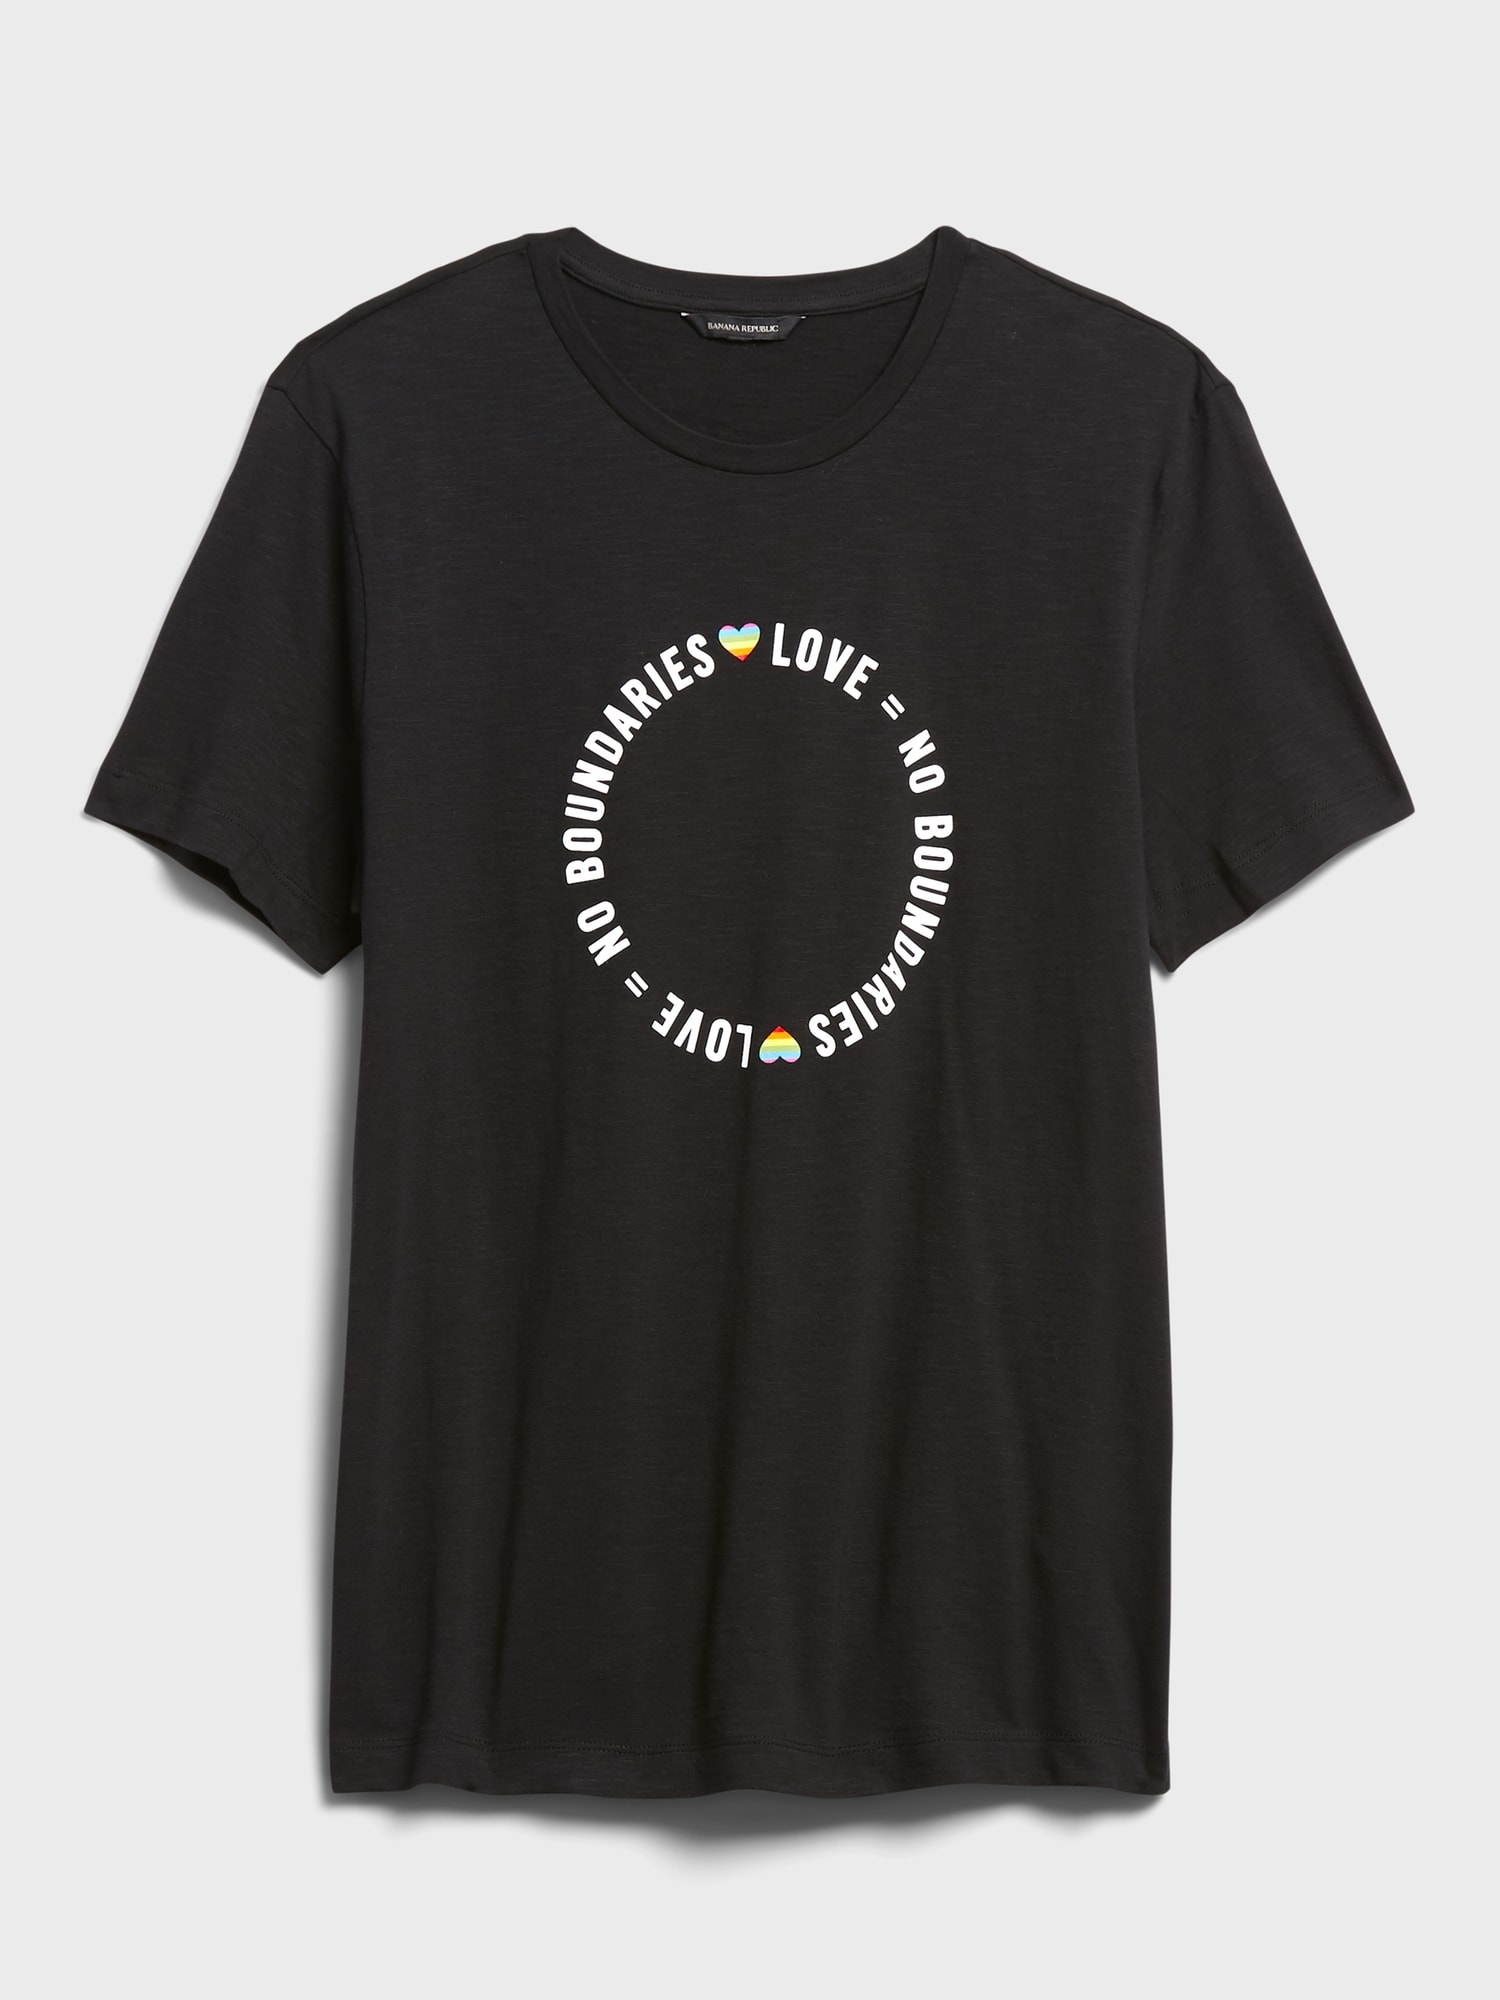 Pride Graphic T-Shirt (Men's Sizes)